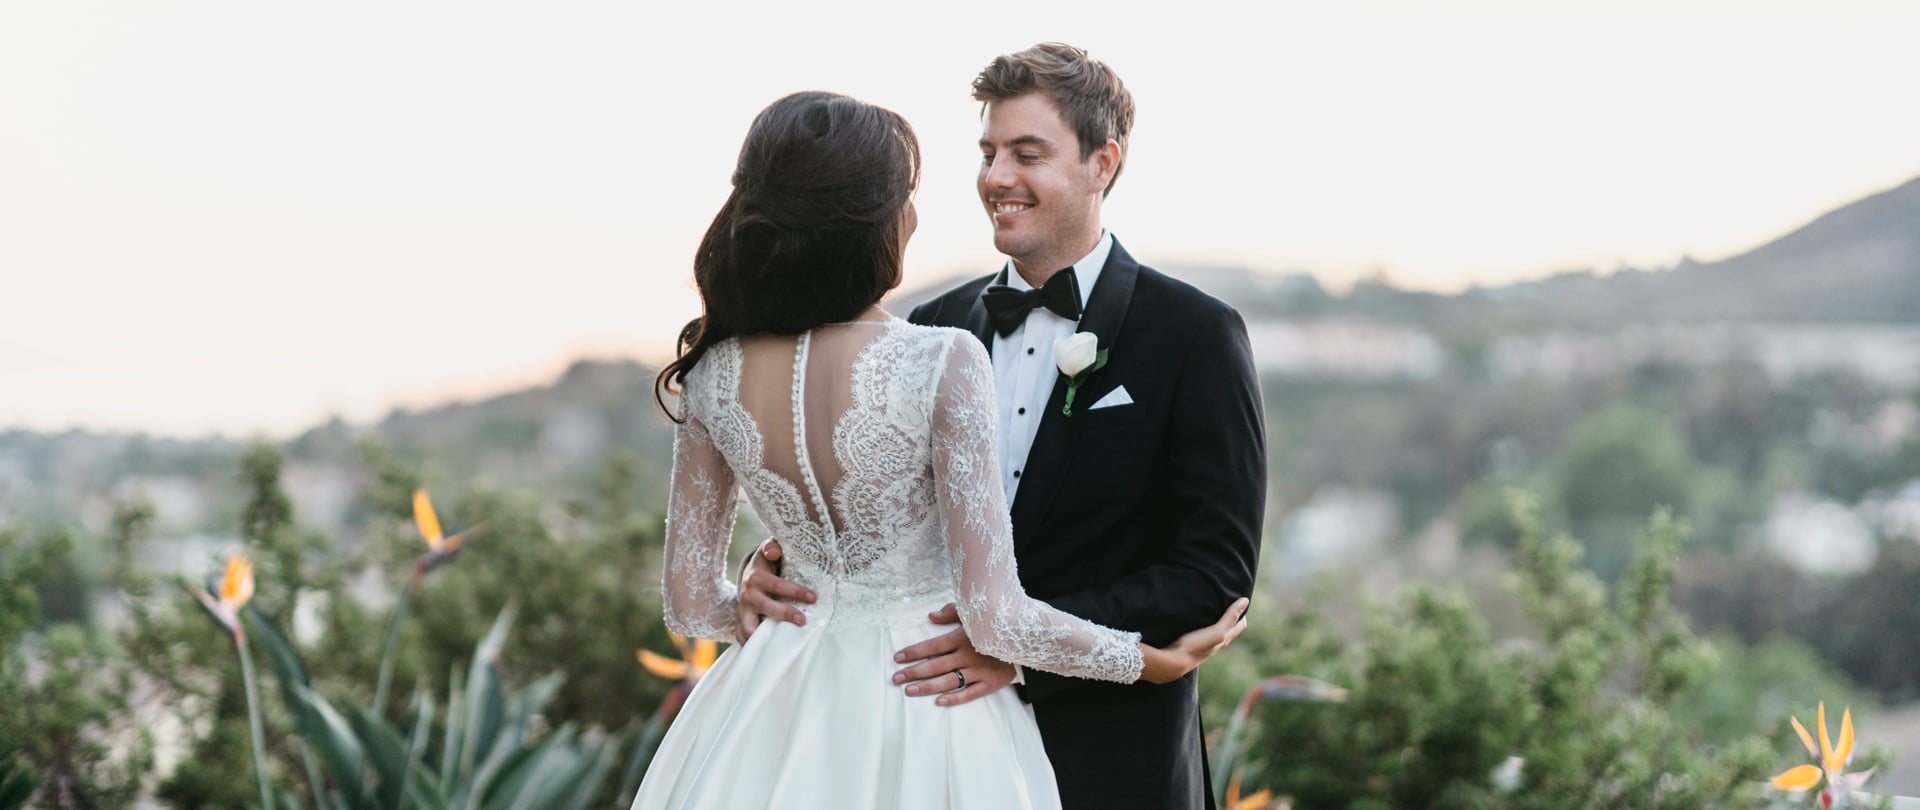 Danielle & Chris Wedding Video Filmed atCalifornia,United States